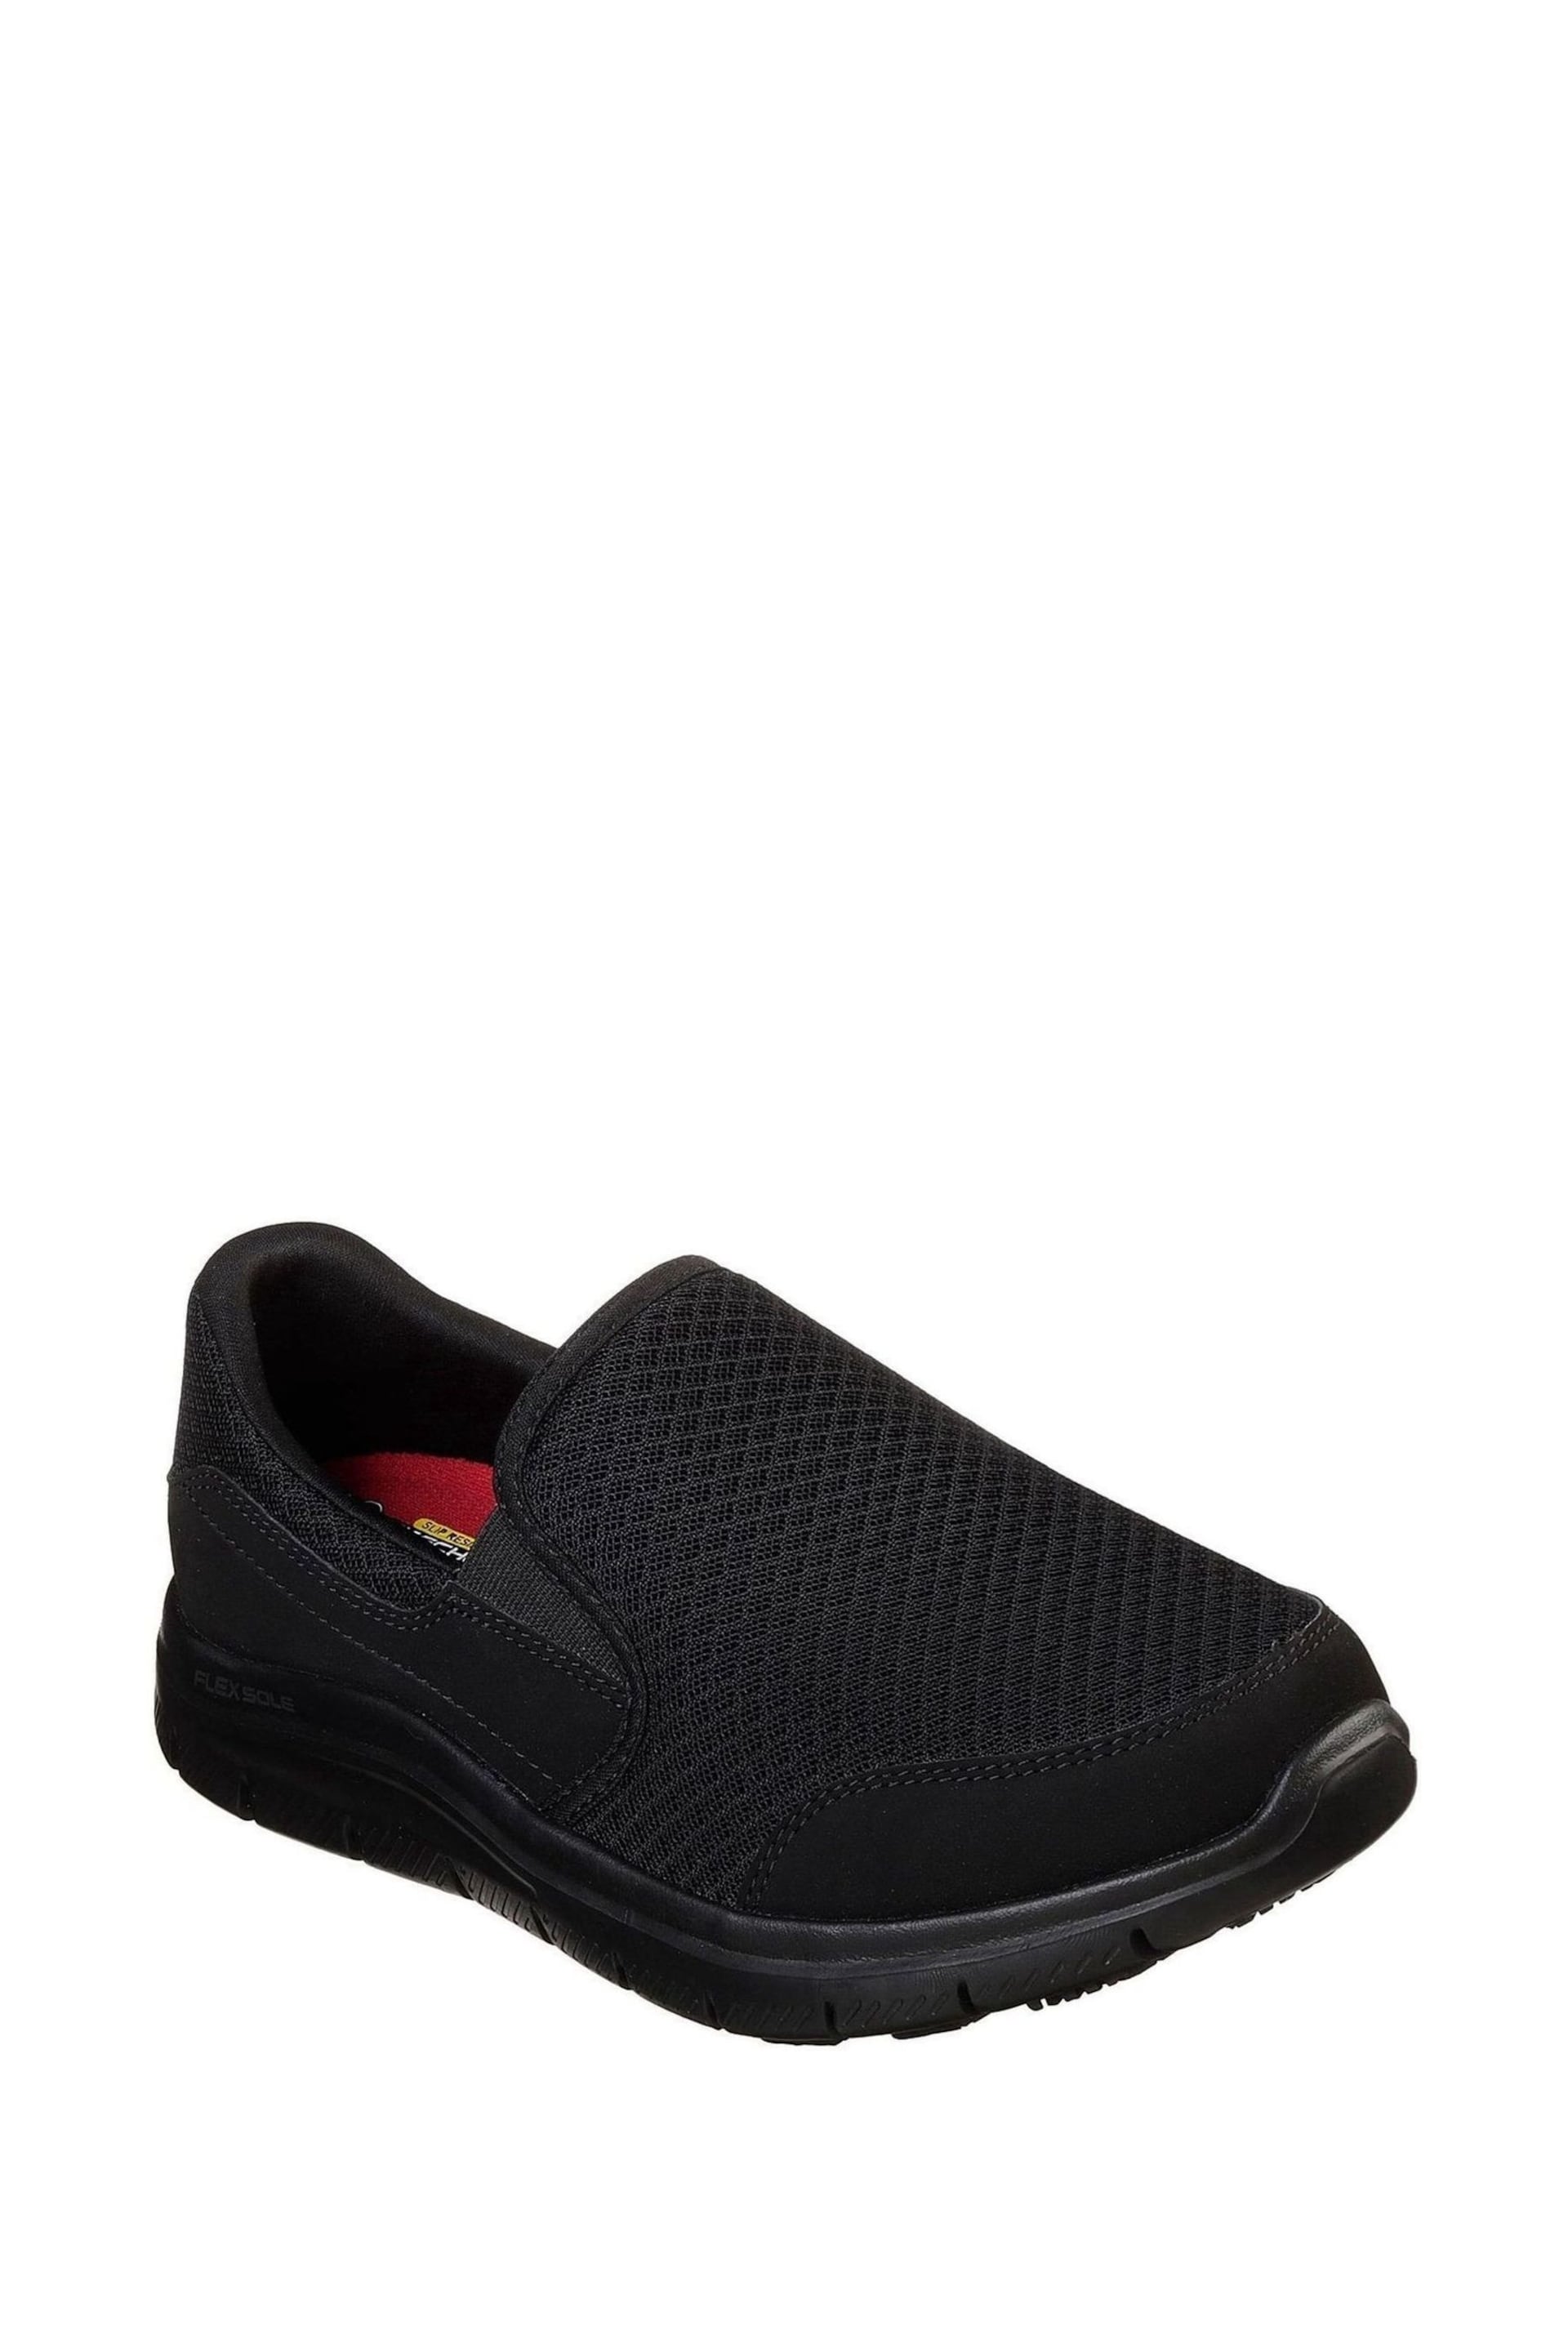 Skechers Black Cozard Slip-On Slip Resistant Work Womens Shoes - Image 2 of 3